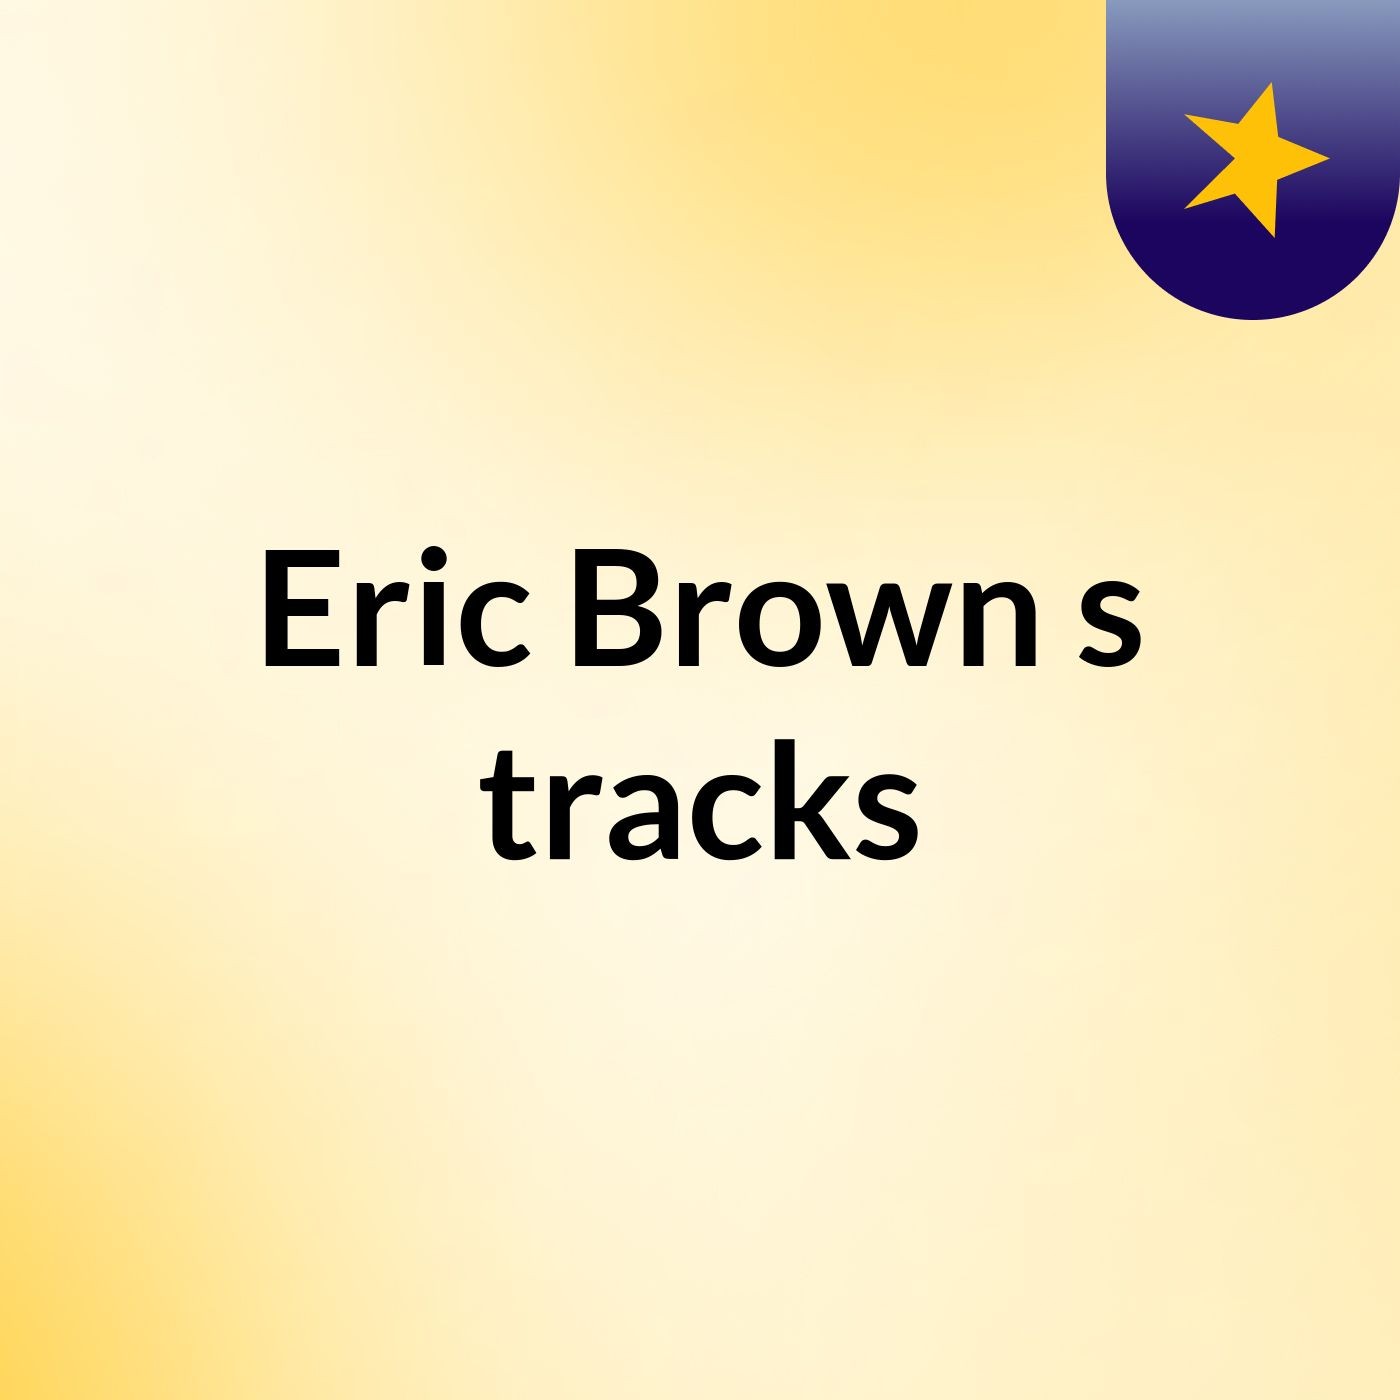 Eric Brown's tracks